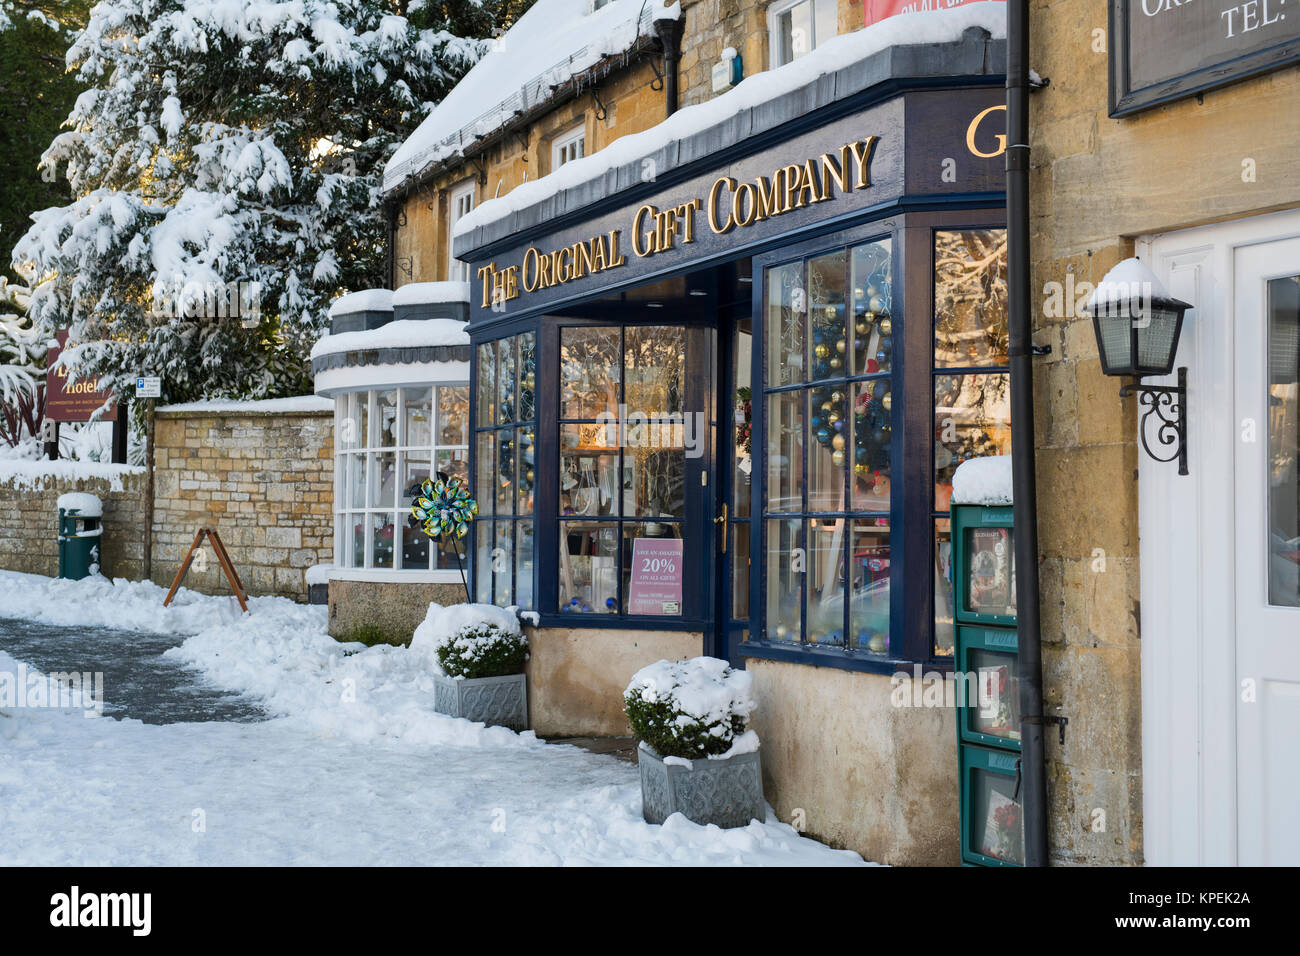 Il regalo originale company shop al tempo di natale nella neve. Stow on the Wold, Cotswolds, Gloucestershire, Inghilterra Foto Stock